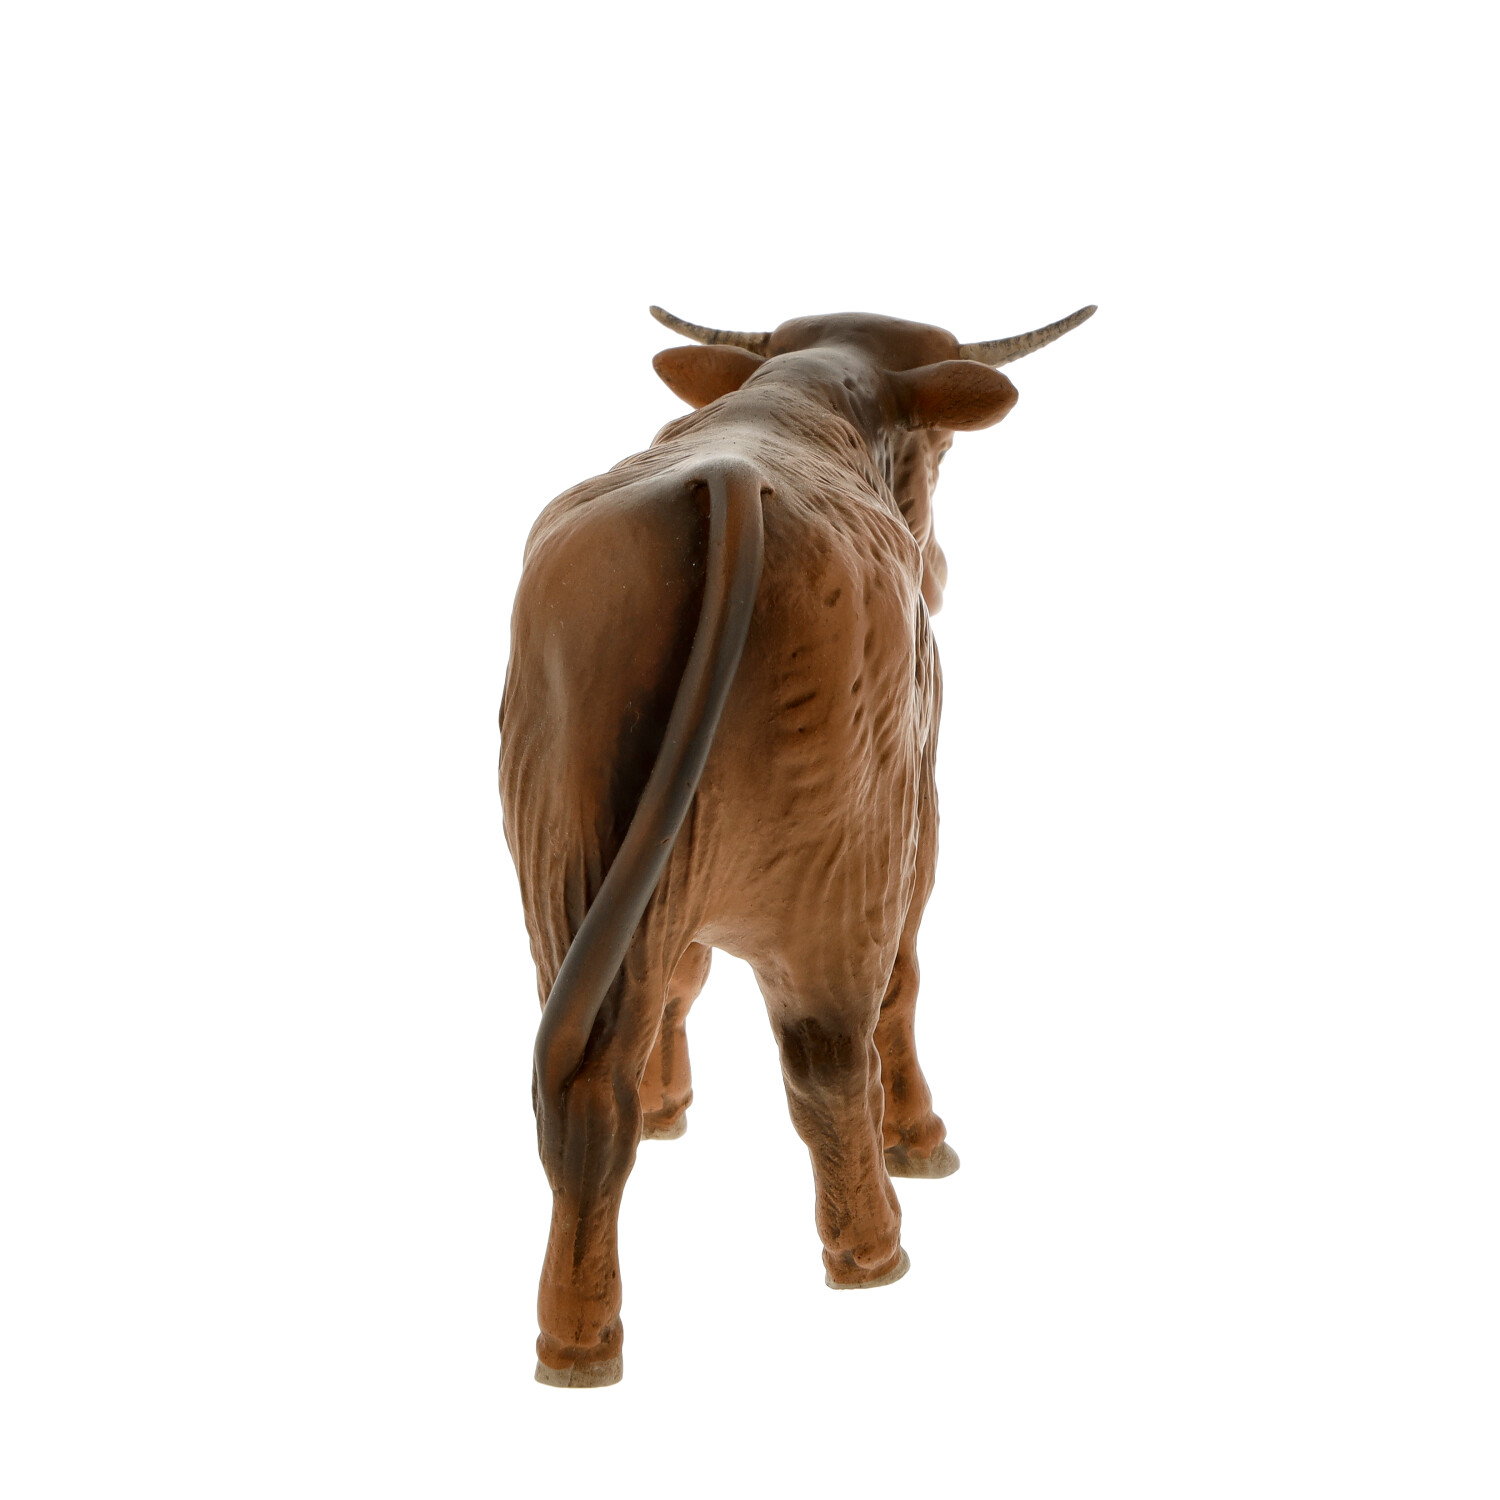 Standing ox - Marolin Nativity figure - made in Germany